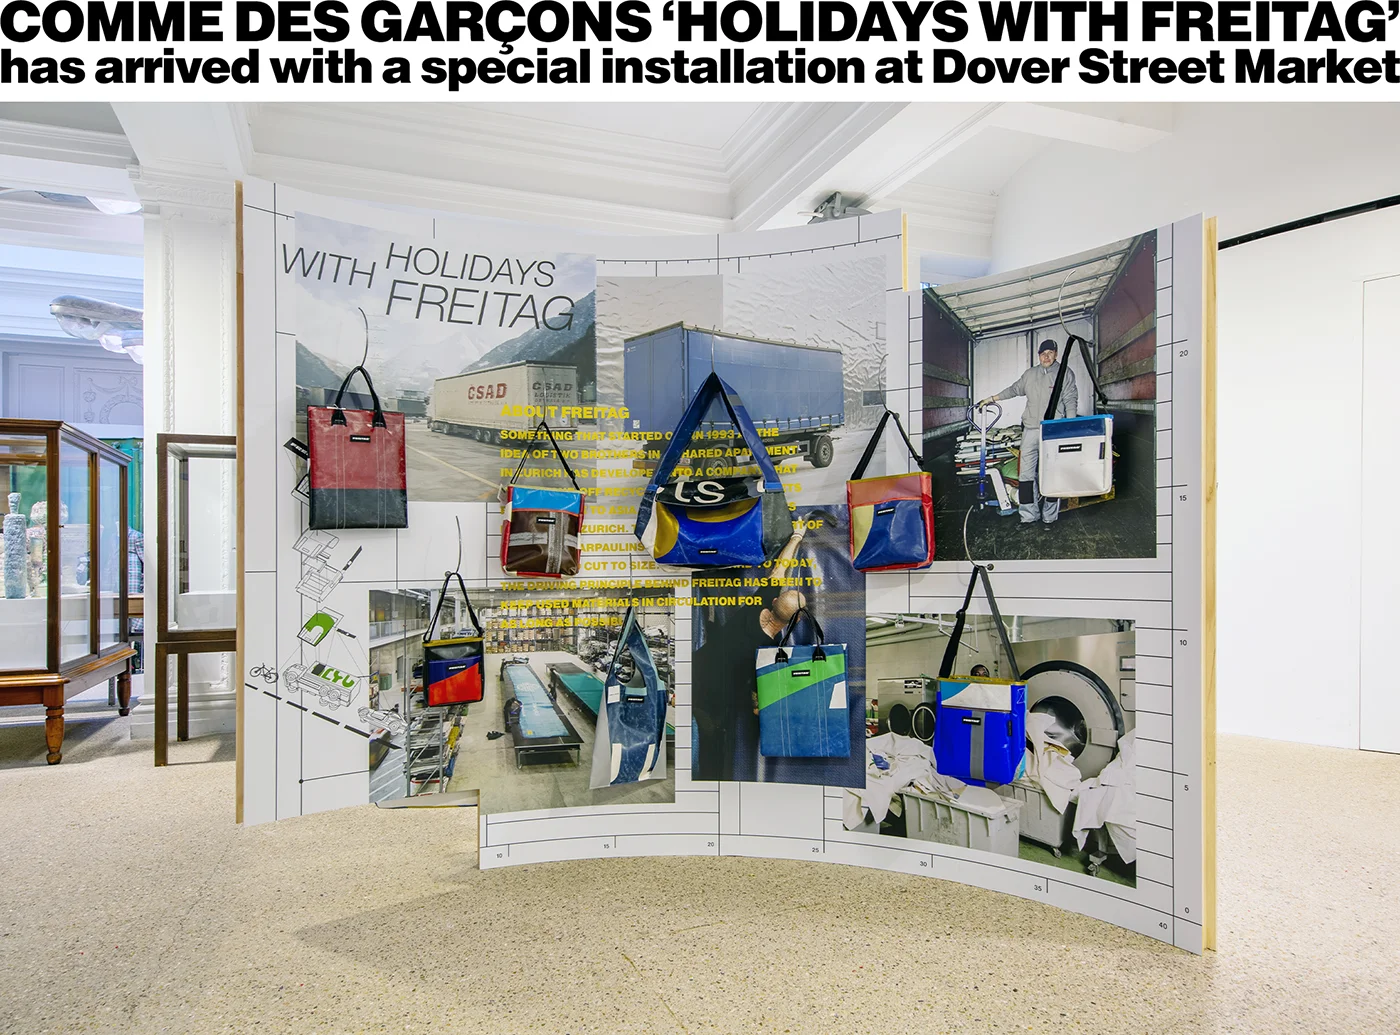 Dover Street Market: Comme des Garçons 'Holidays with FREITAG' has 